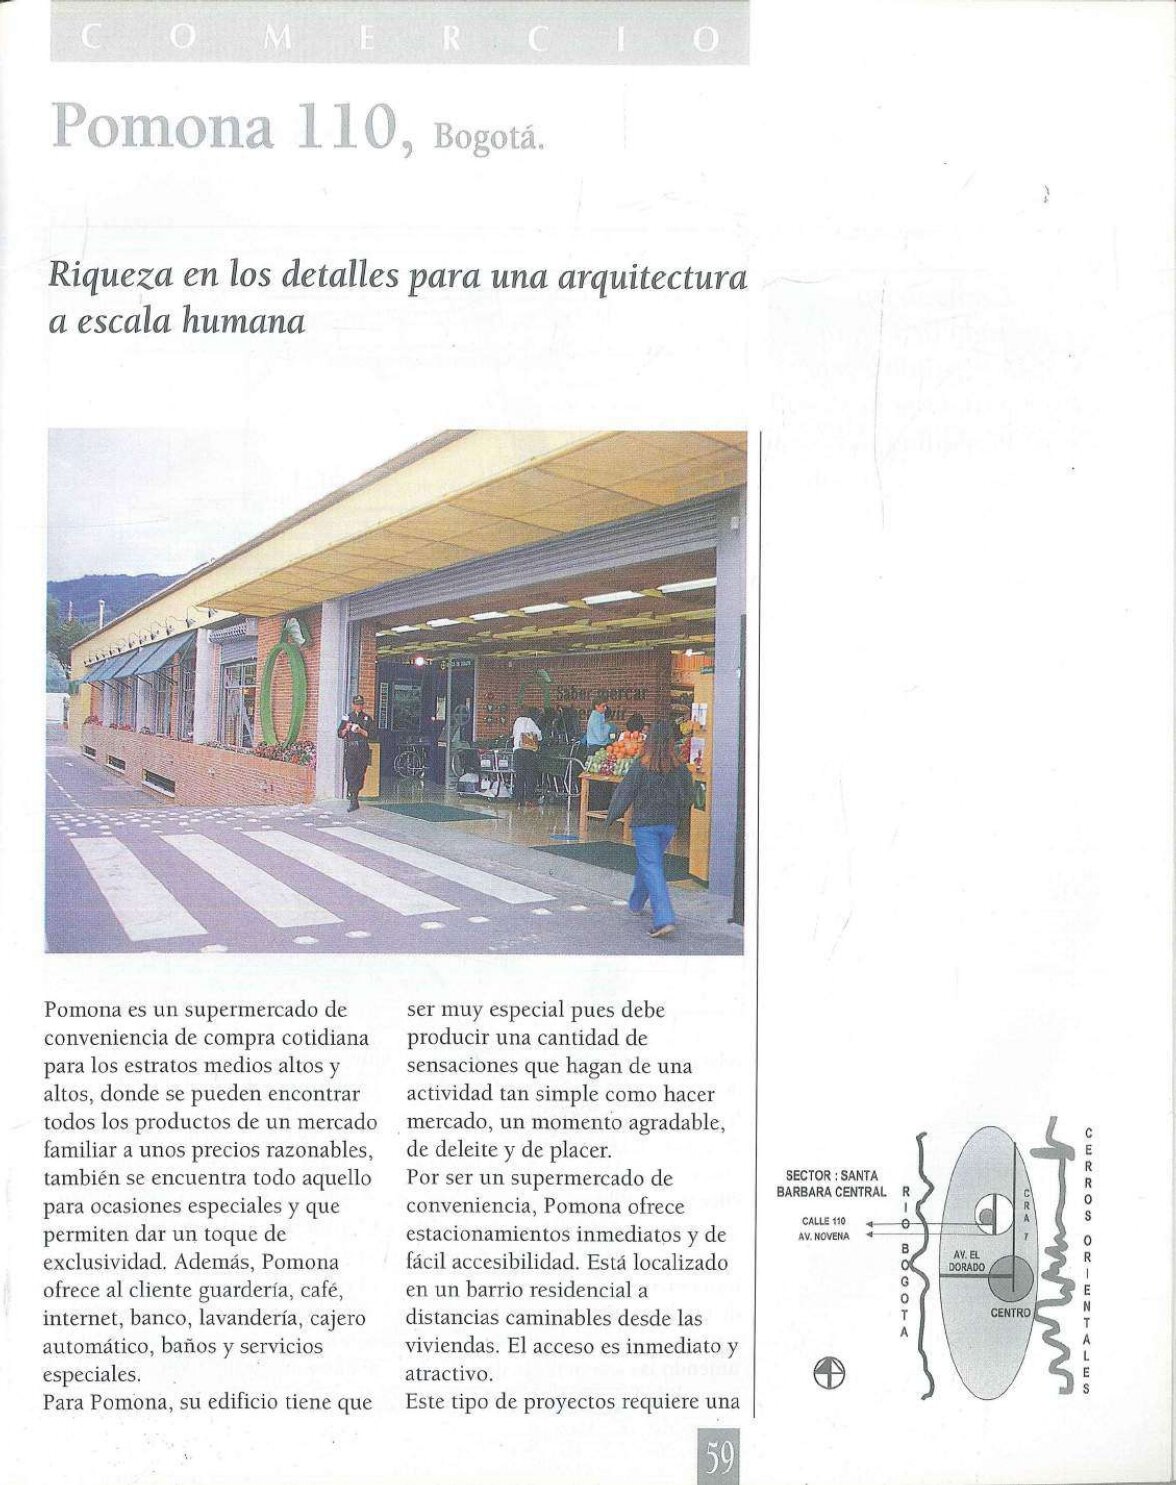 2002_Contexto Urbano- Obra reciente 1995-2002. REVISTA PROA 1_compressed (1)_page-0061.jpg